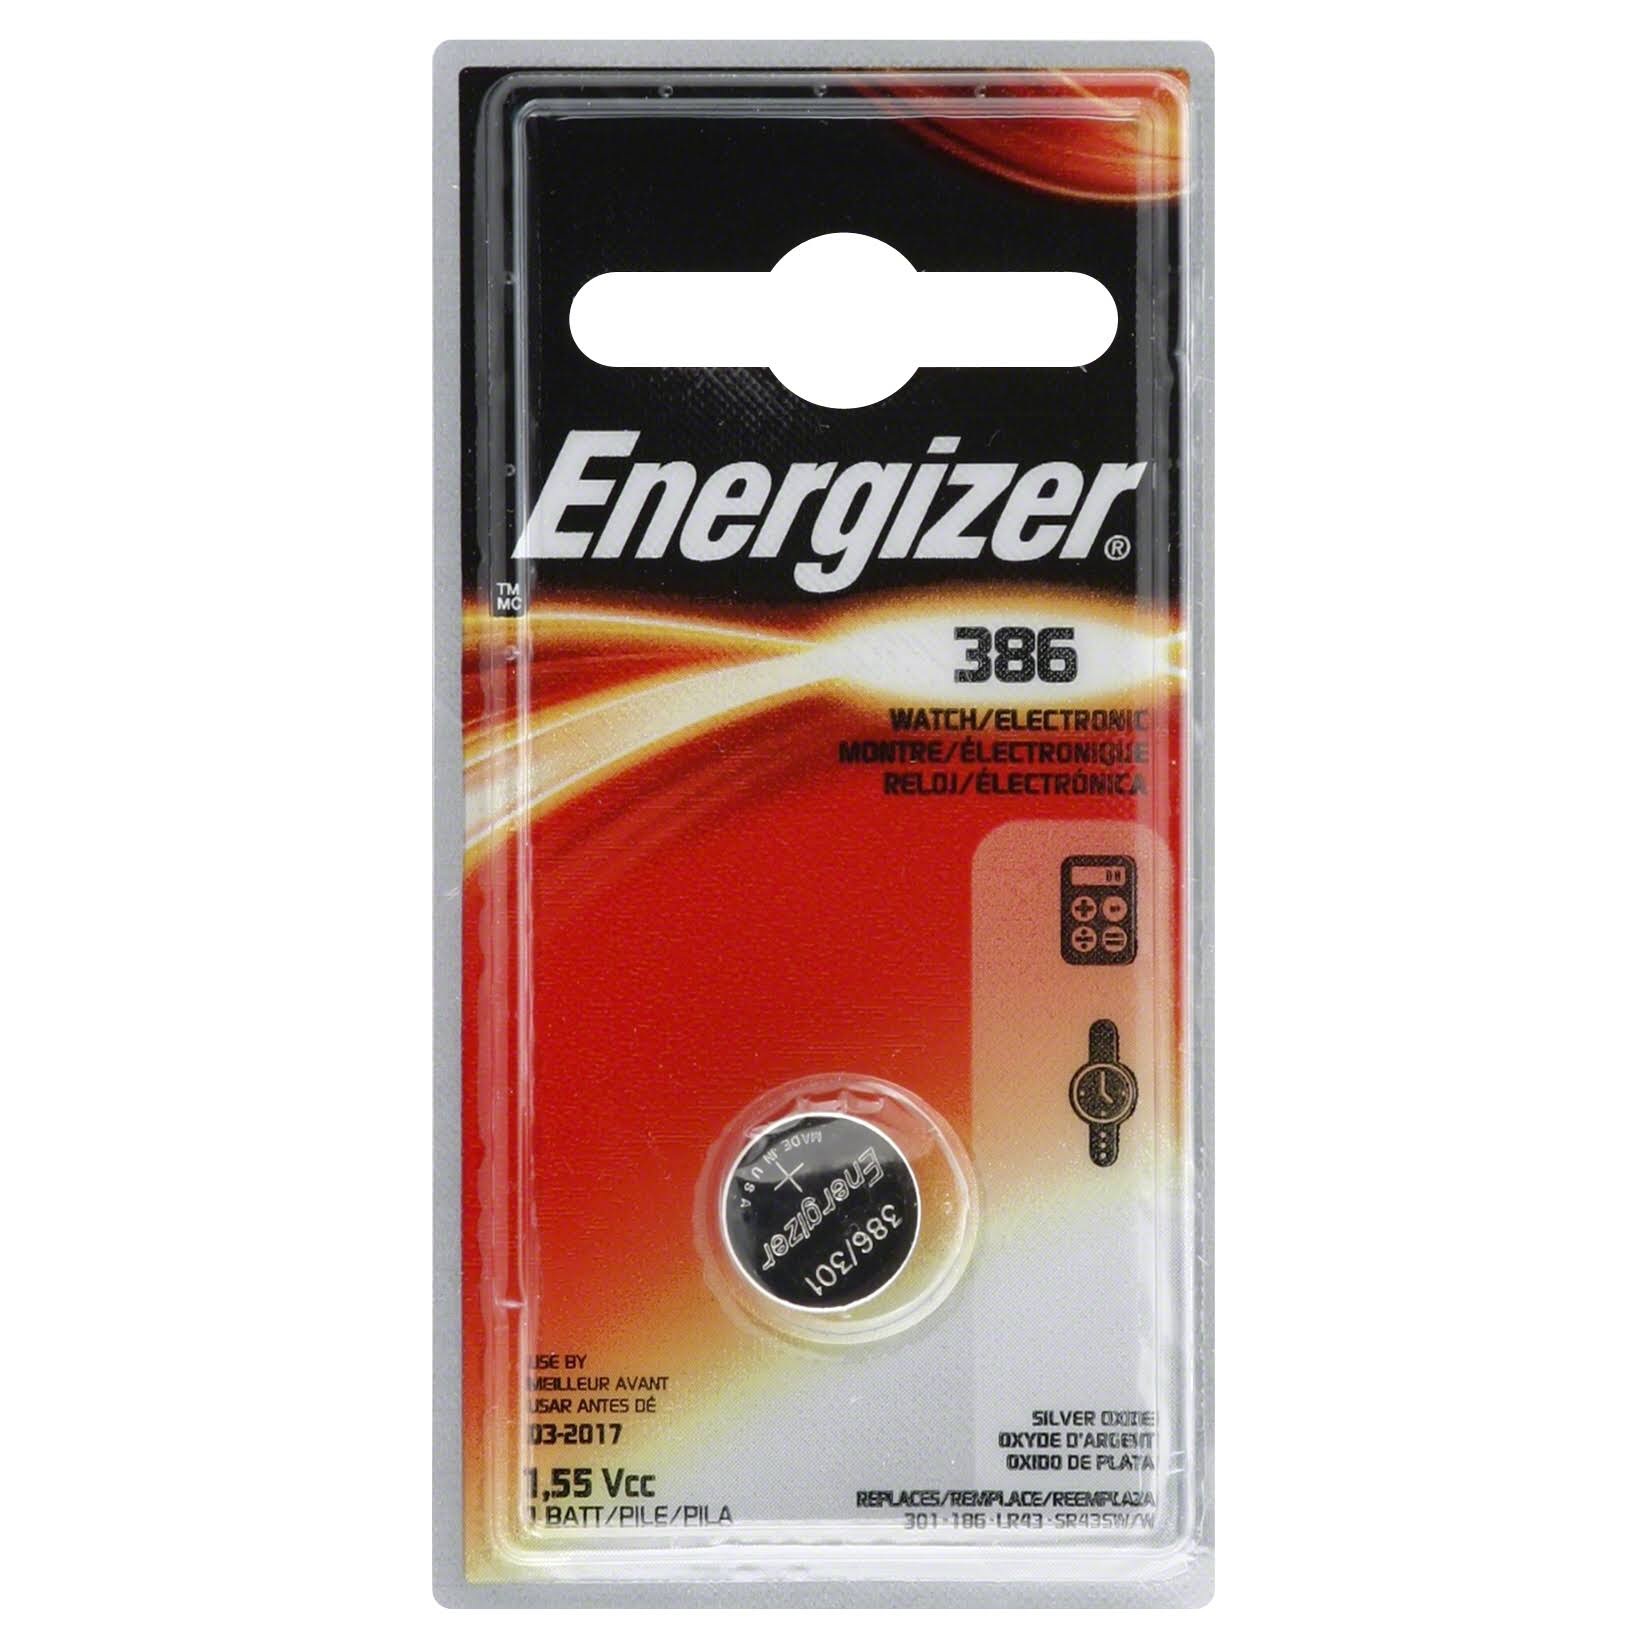 Energizer Silver Oxide Battery - 386